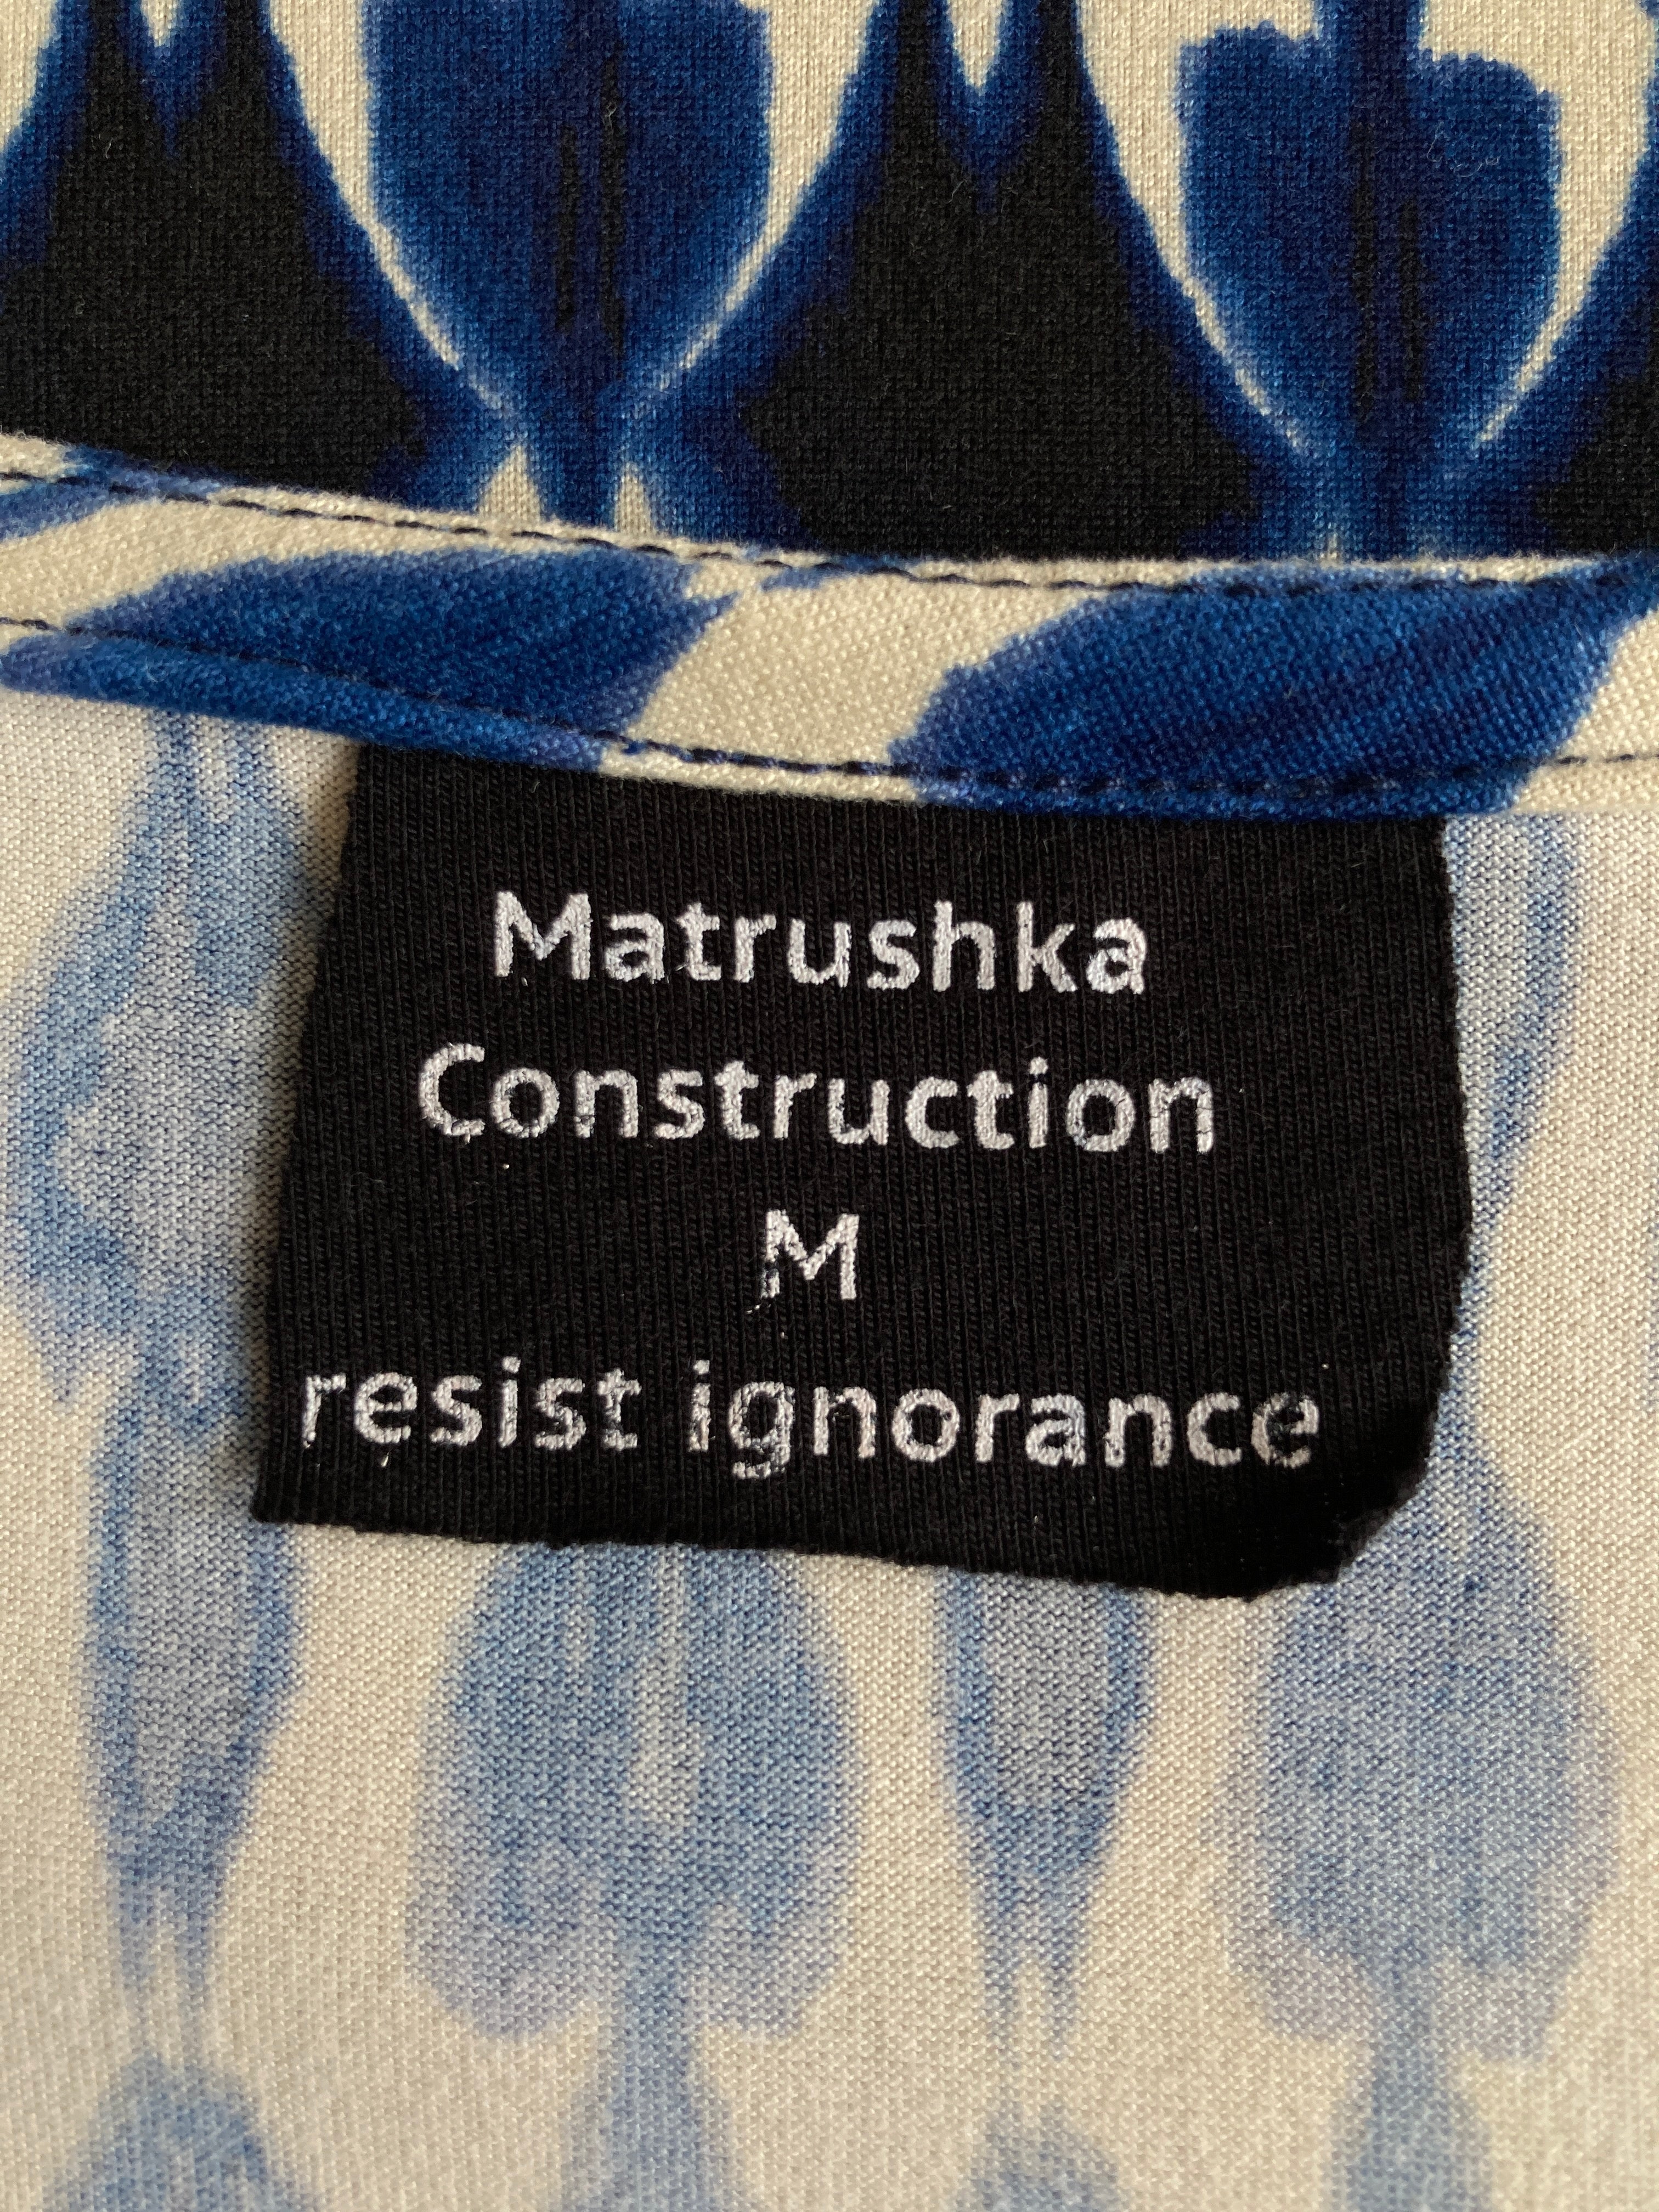 Matrushka Blue and Cream Print Tunic, M